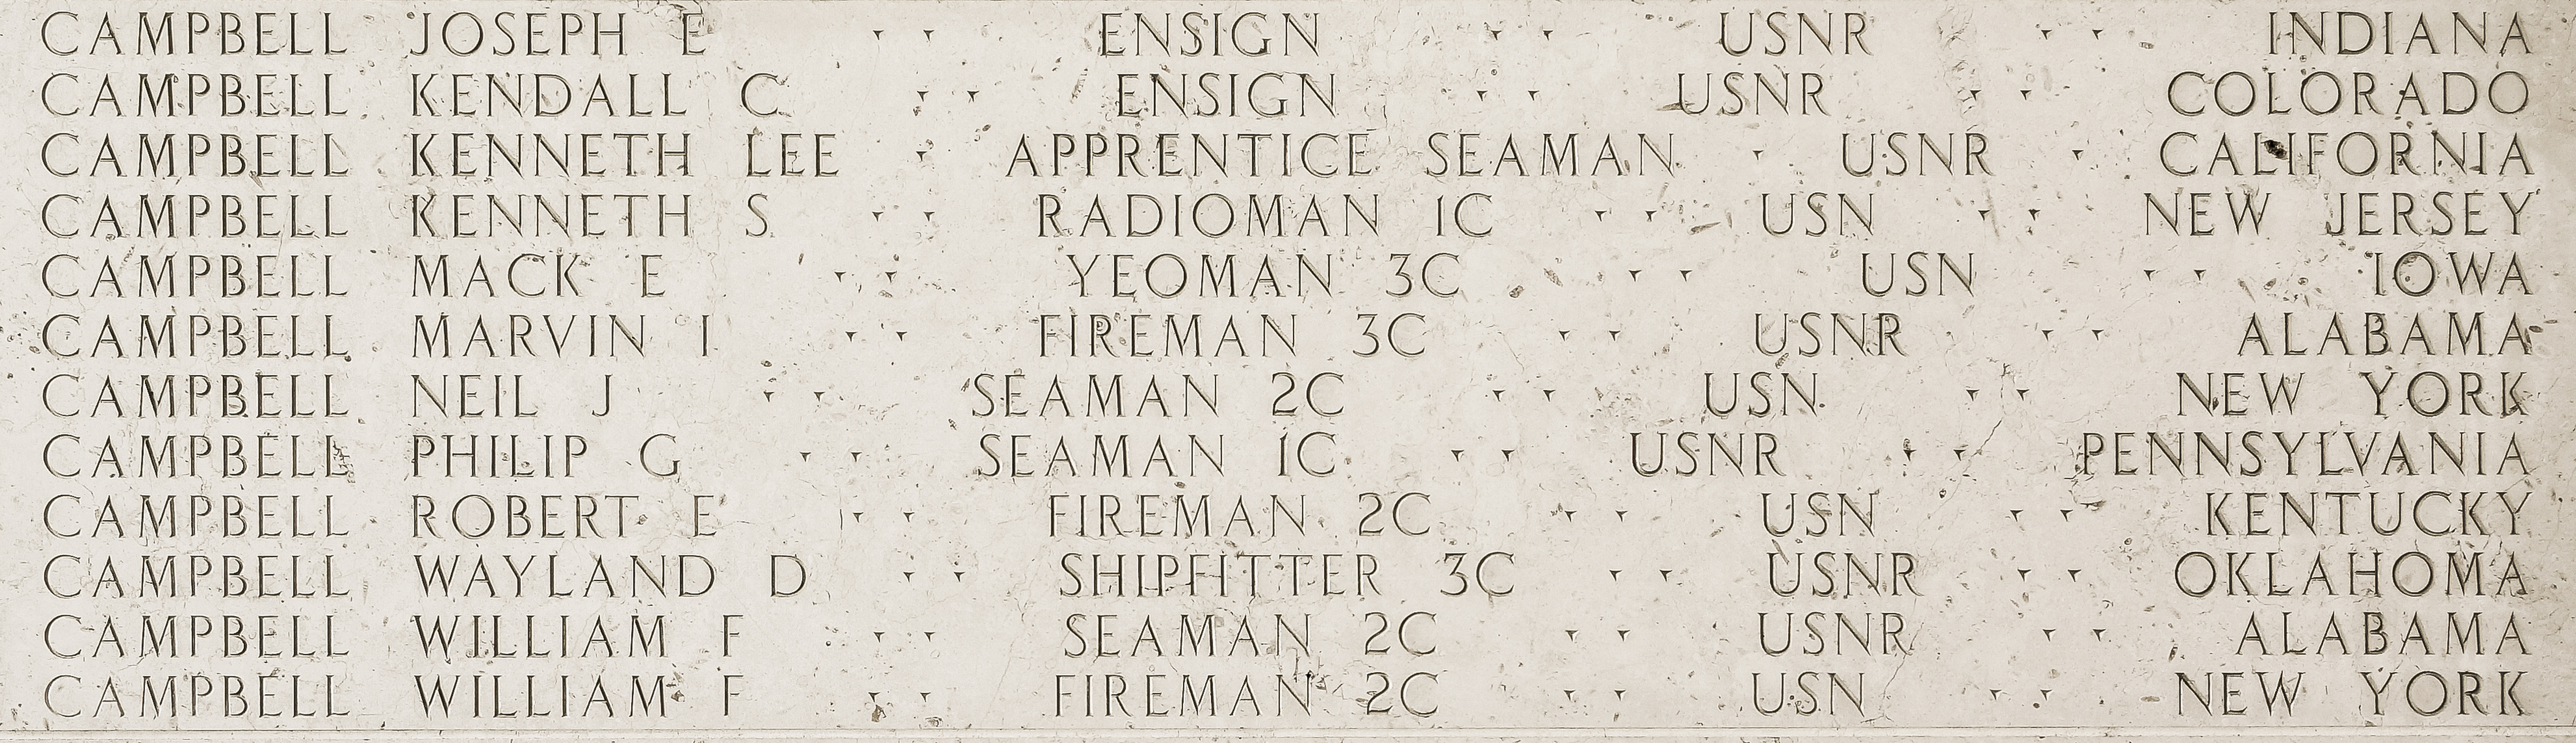 William F. Campbell, Seaman Second Class